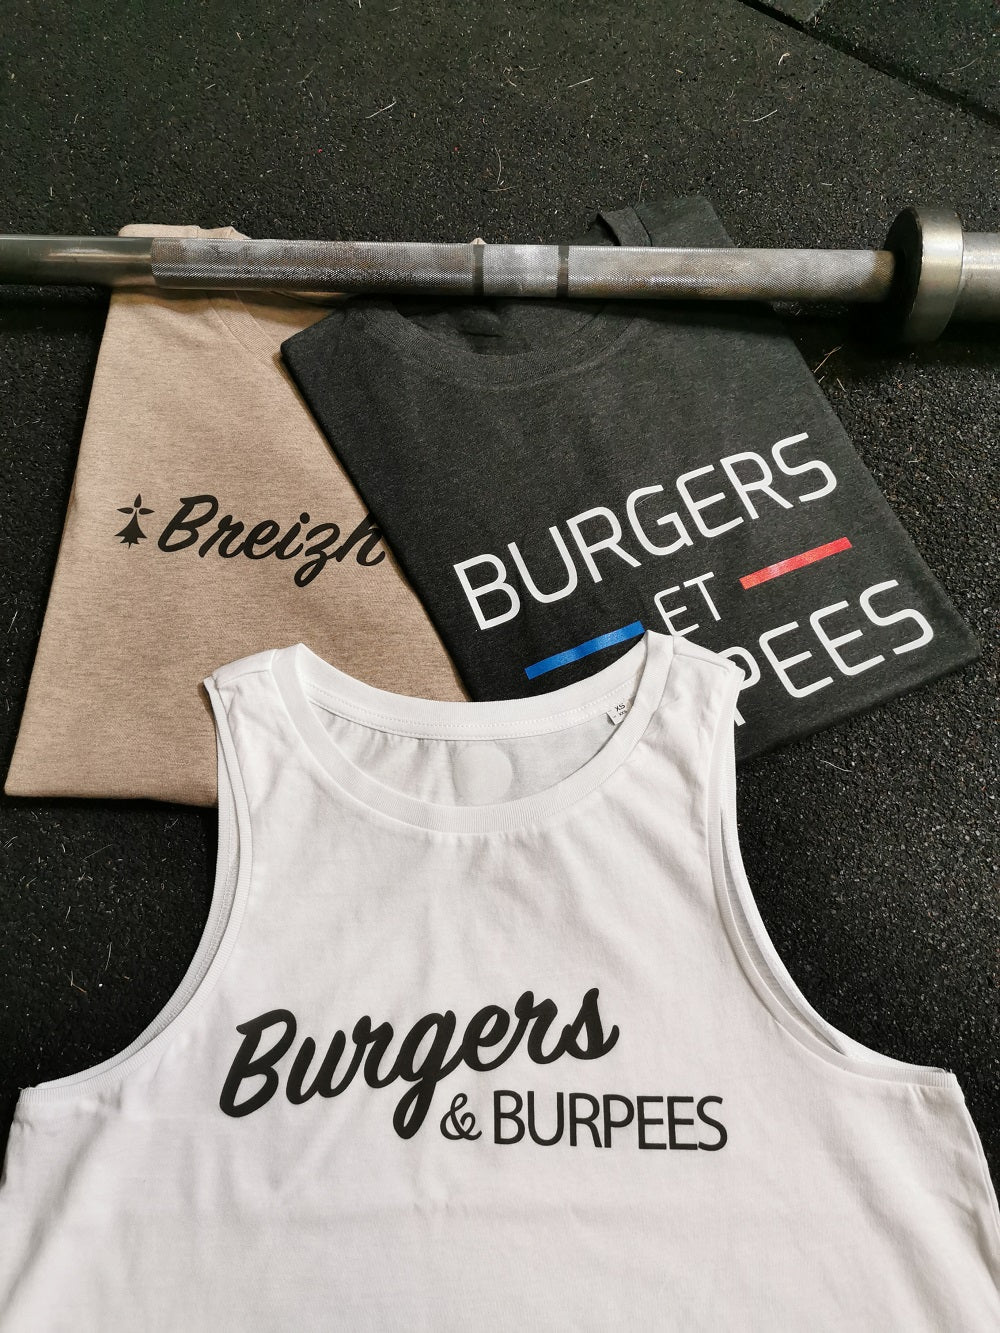 Burgers & Burpees